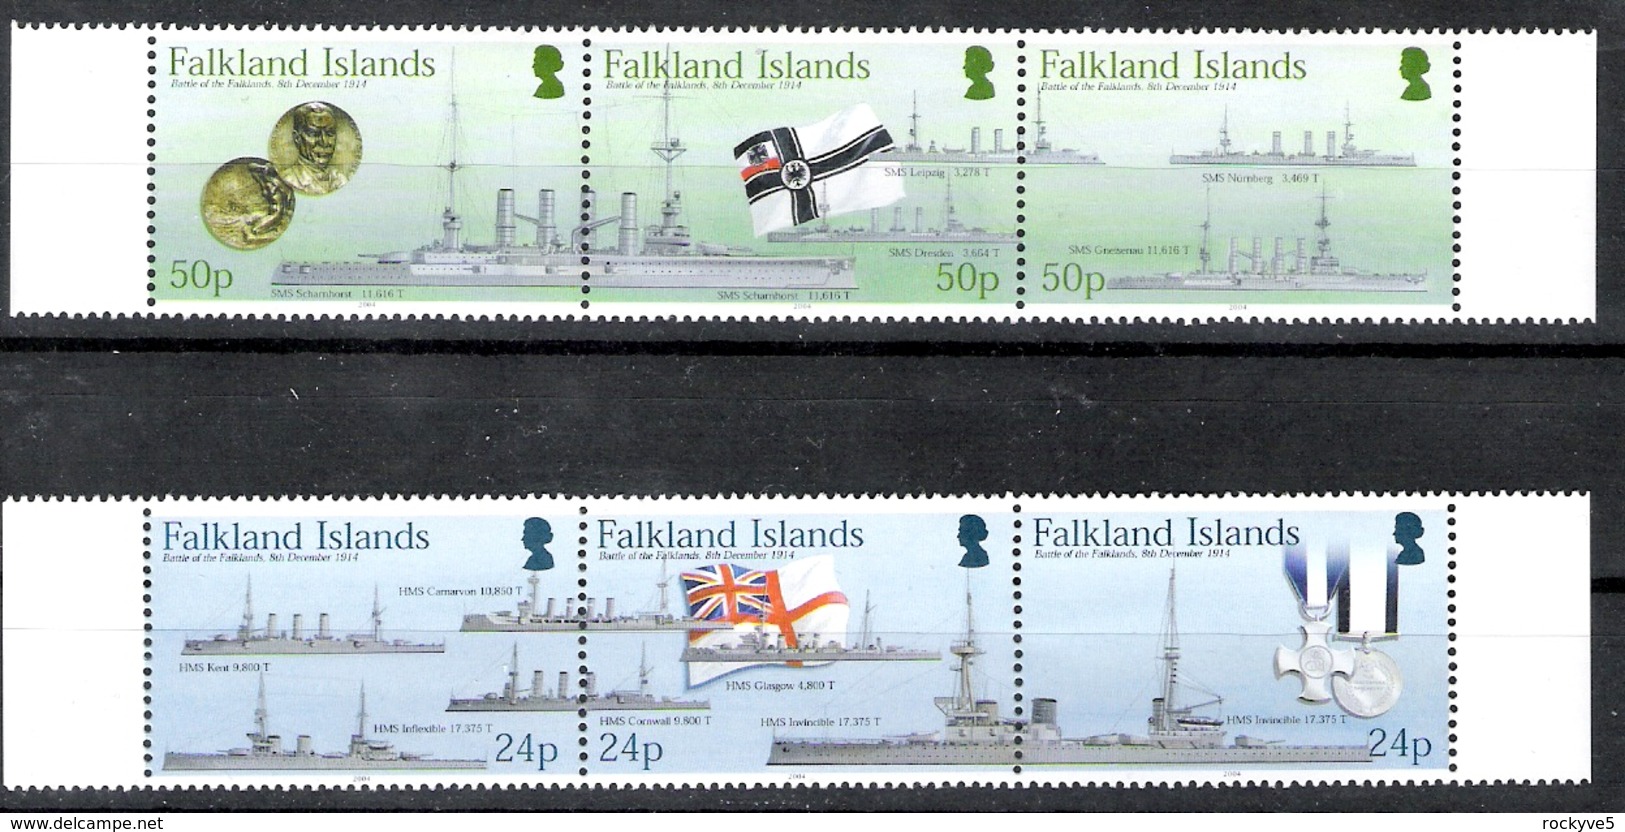 Falkland Islands 2004 90th Anniv Of The Battle Of The Falklands MNH CV £22.00 - Falklandeilanden